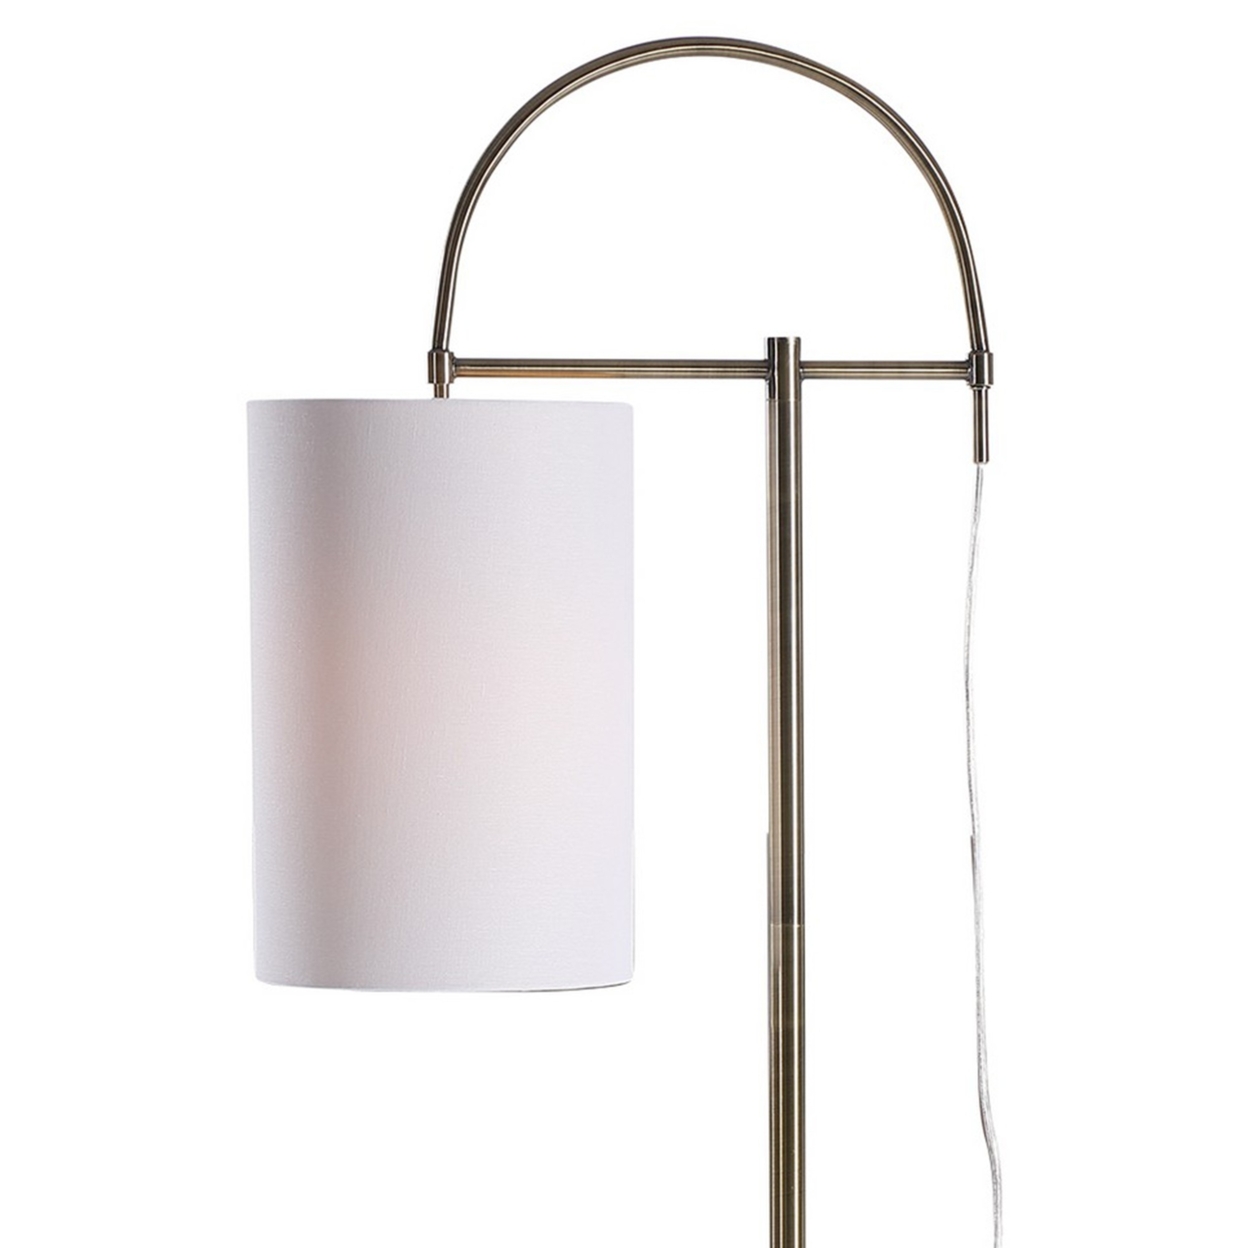 Stalk Design Metal Floor Lamp With Open Semi Circle Accent, Silver- Saltoro Sherpi